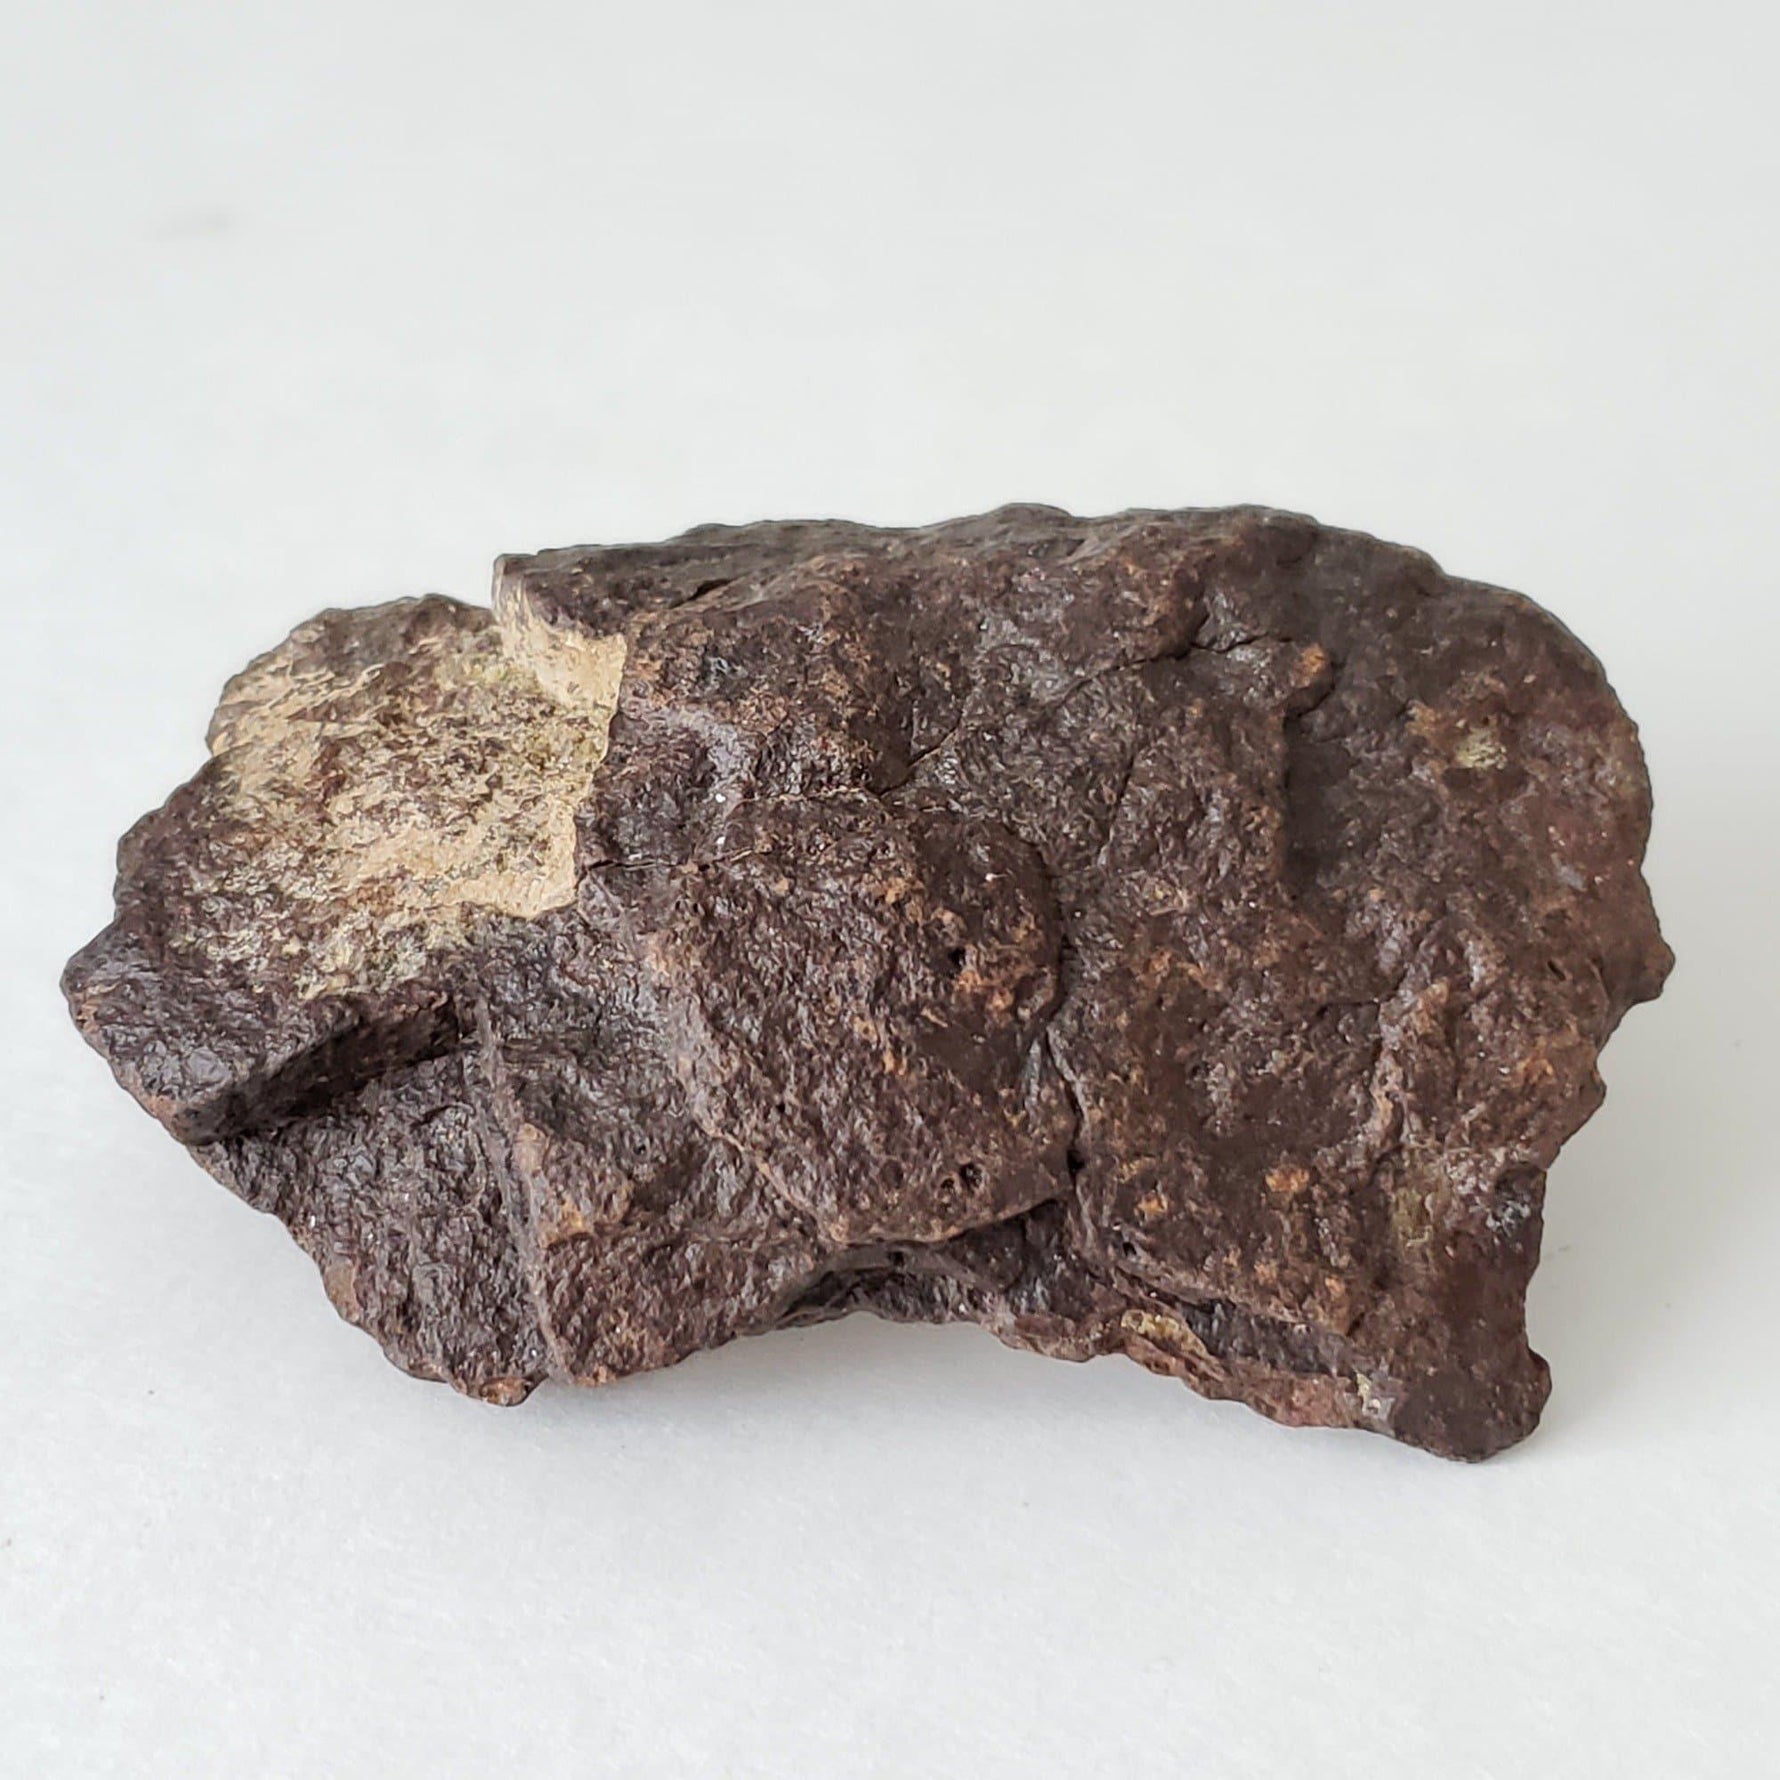 Dhofar 221 Meteorite | 63.52 Grams | Individual | Shocked Chondrite L5 | Sahara